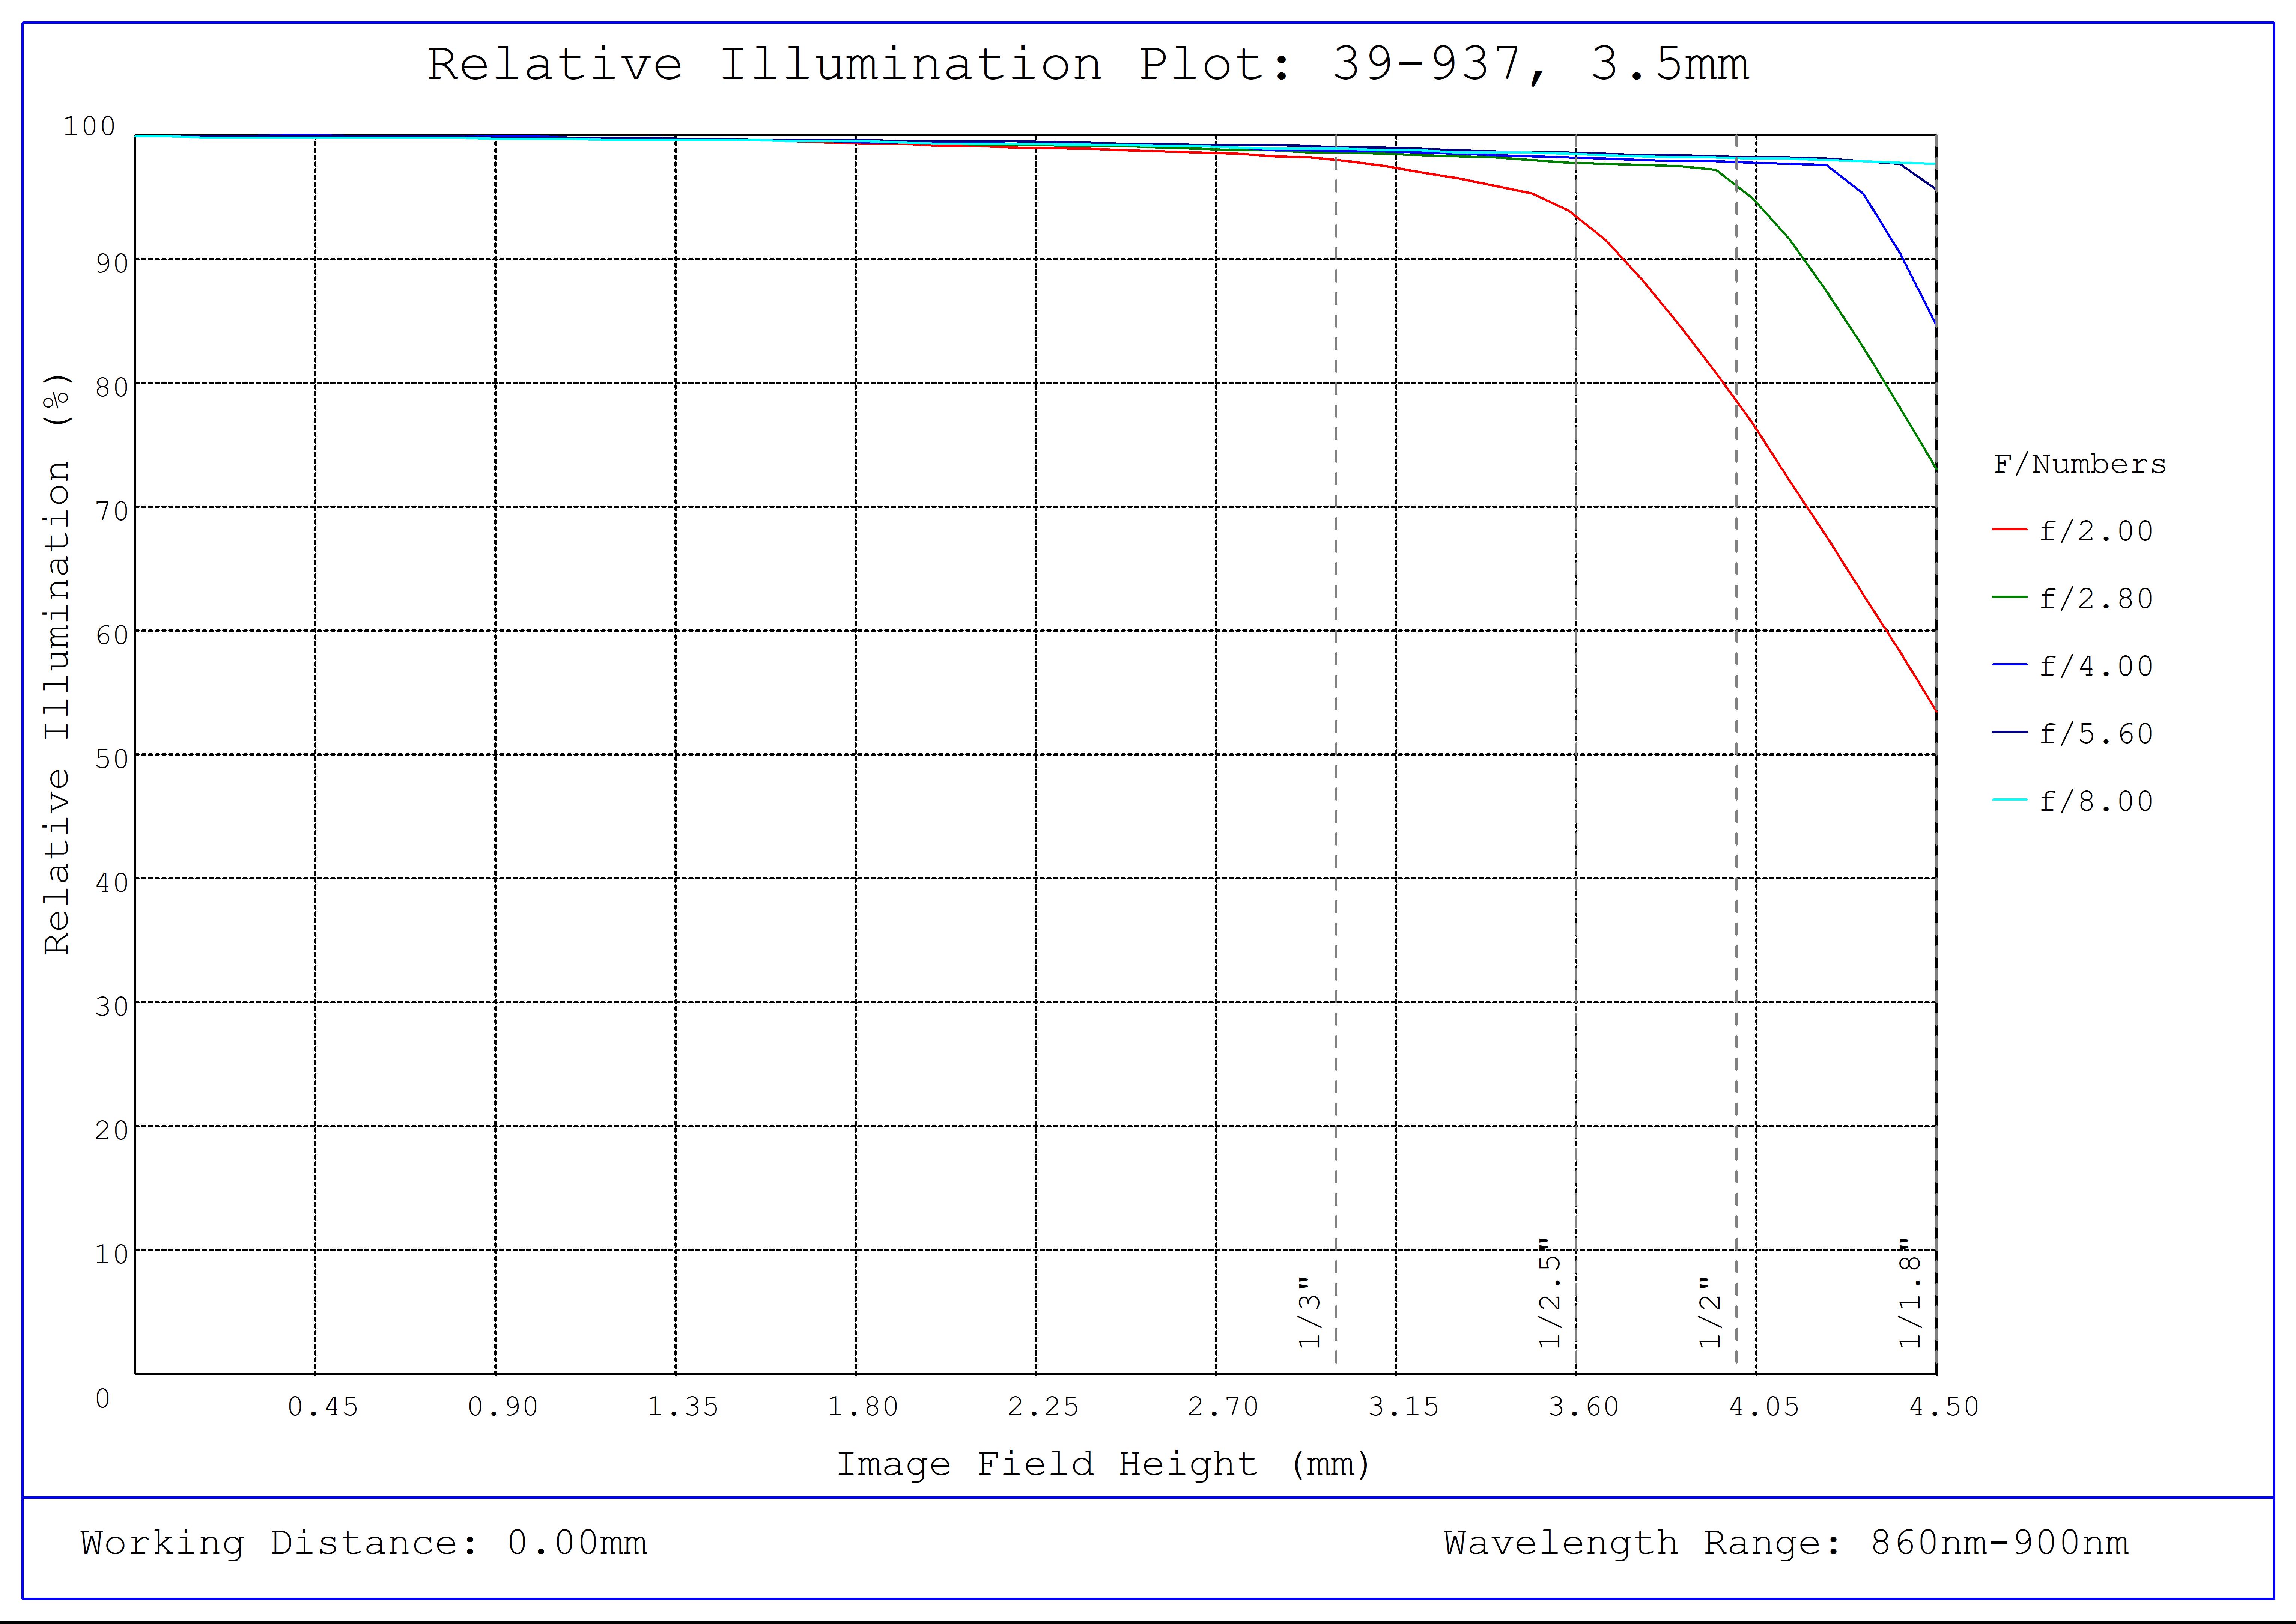 #39-937, 3.5mm C VIS-NIR Series Fixed Focal Length Lens, Relative Illumination Plot (NIR)